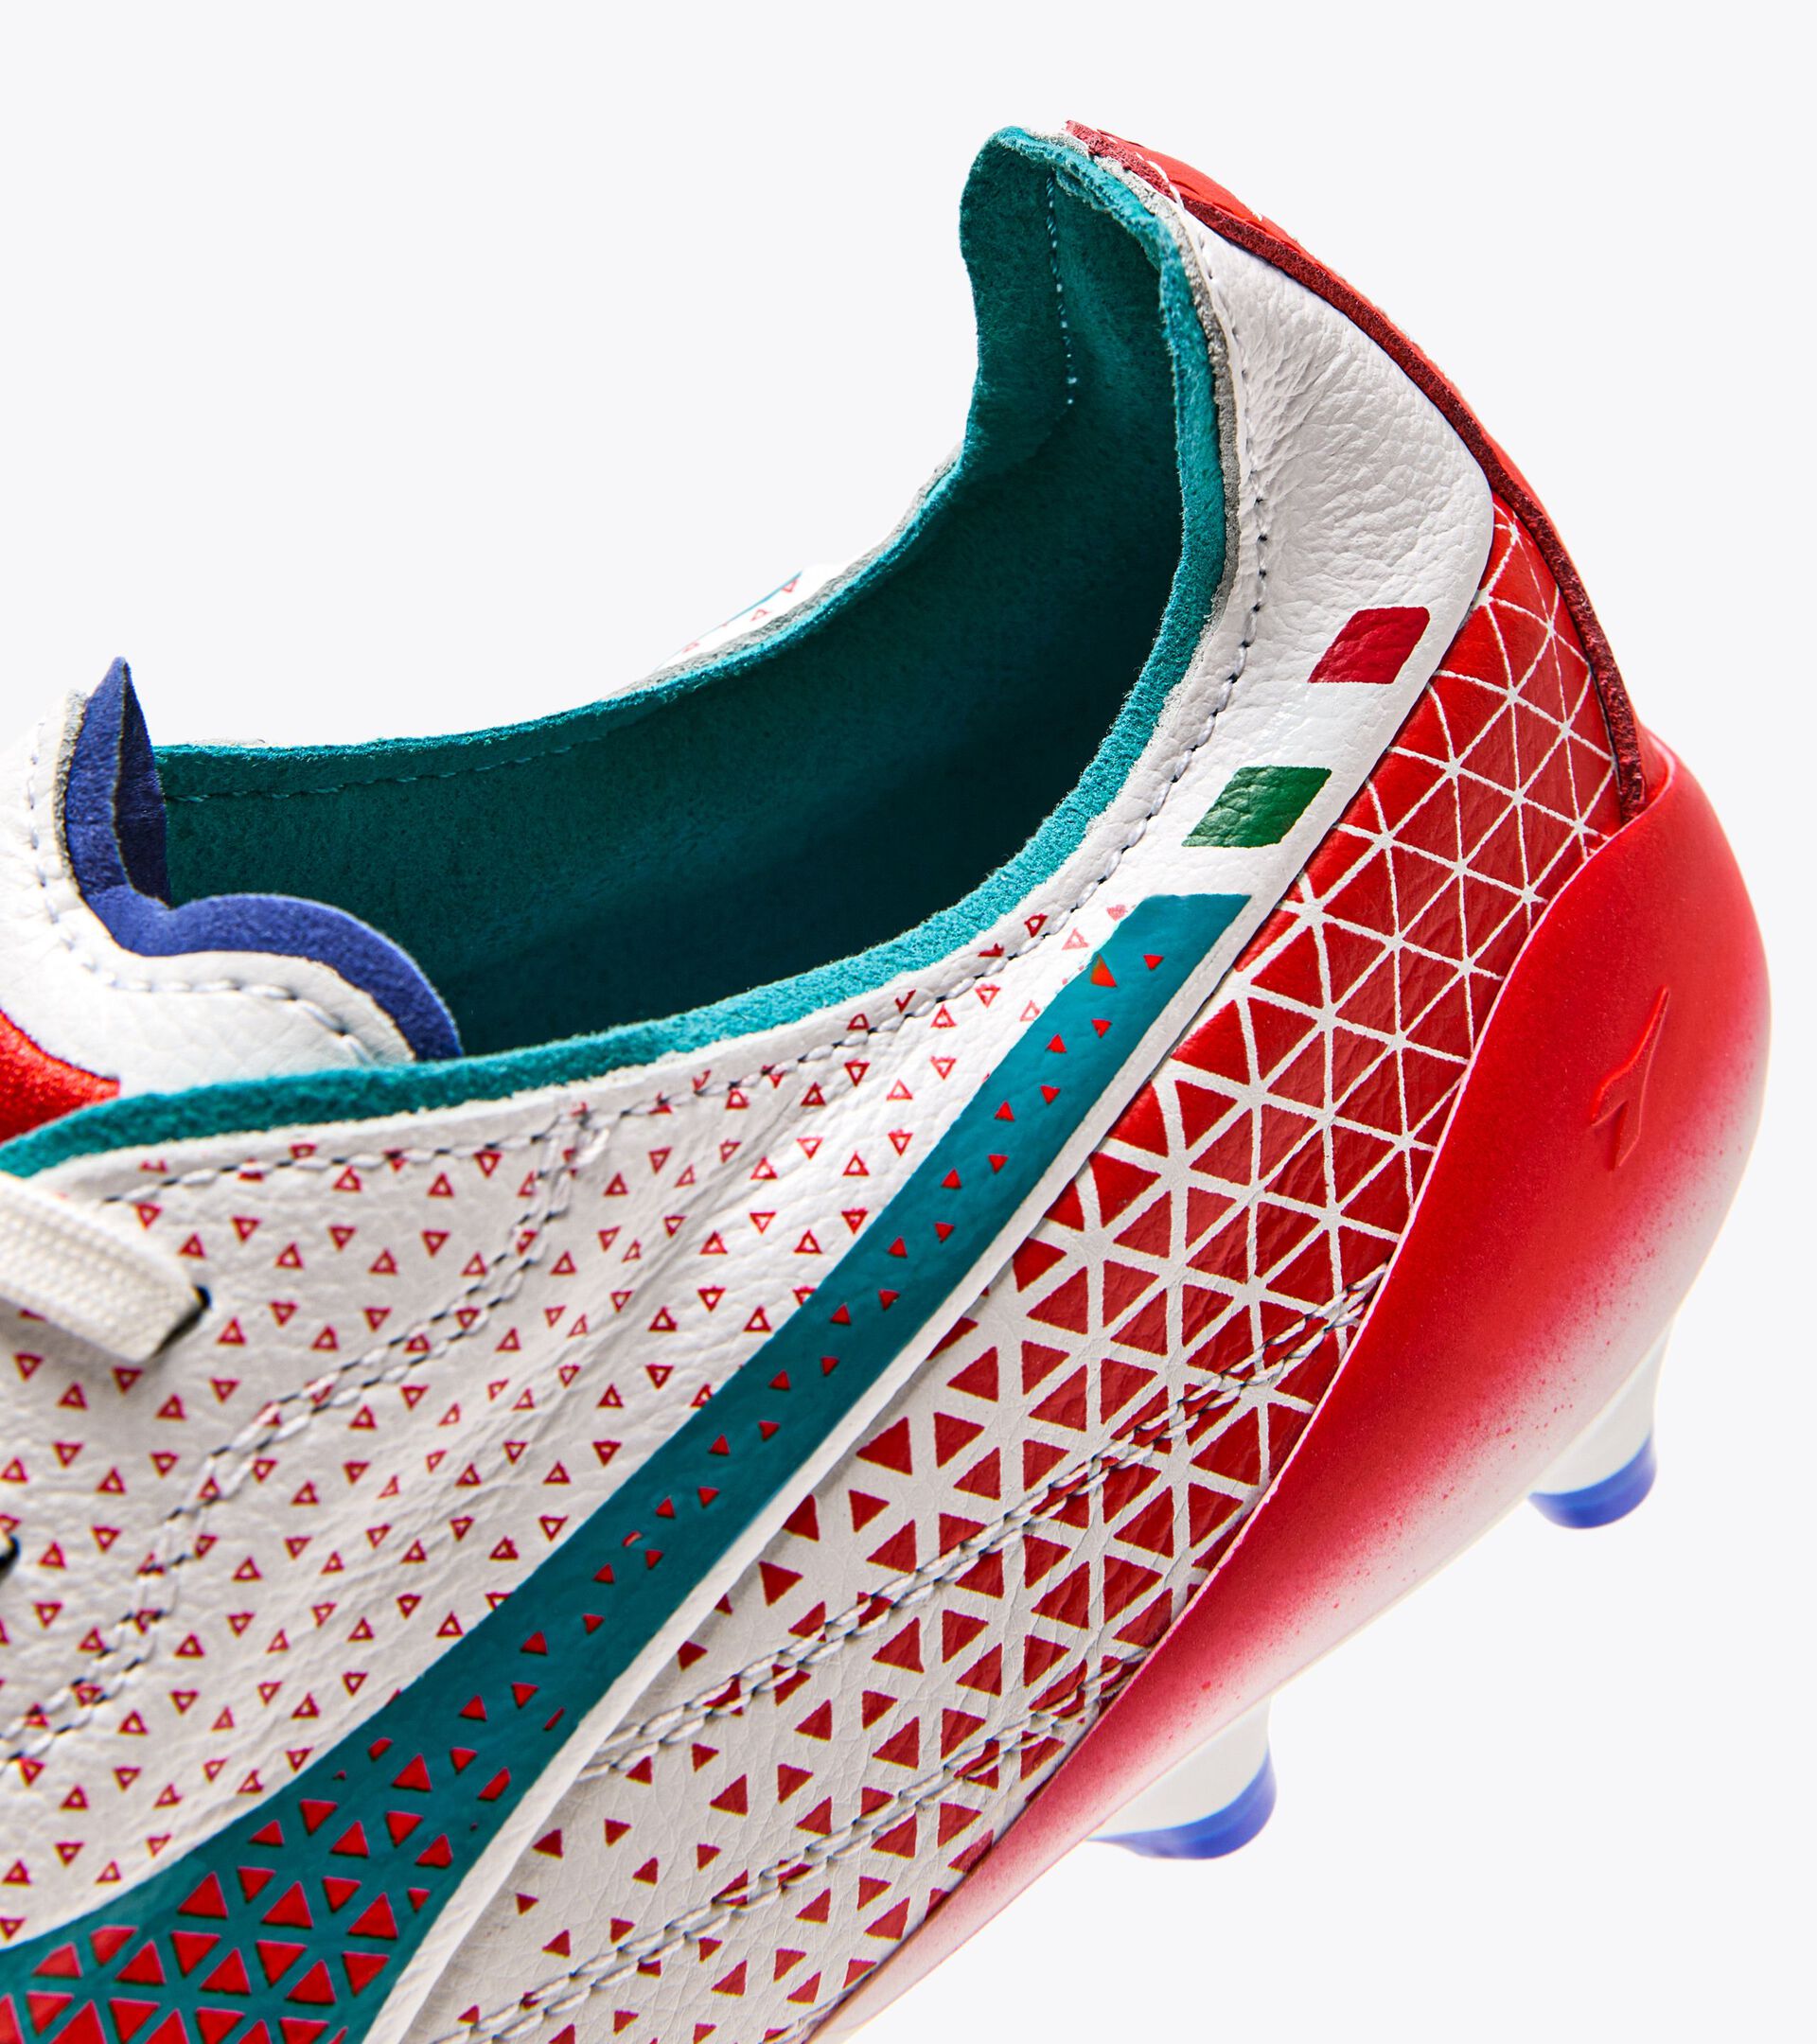 Chaussures de football pour terrains compacts - Made in Italy - Gender neutral  BRASIL ELITE TECH GR ITA LPX BLC/CARREAU BLEU/ROUGE FLUO - Diadora